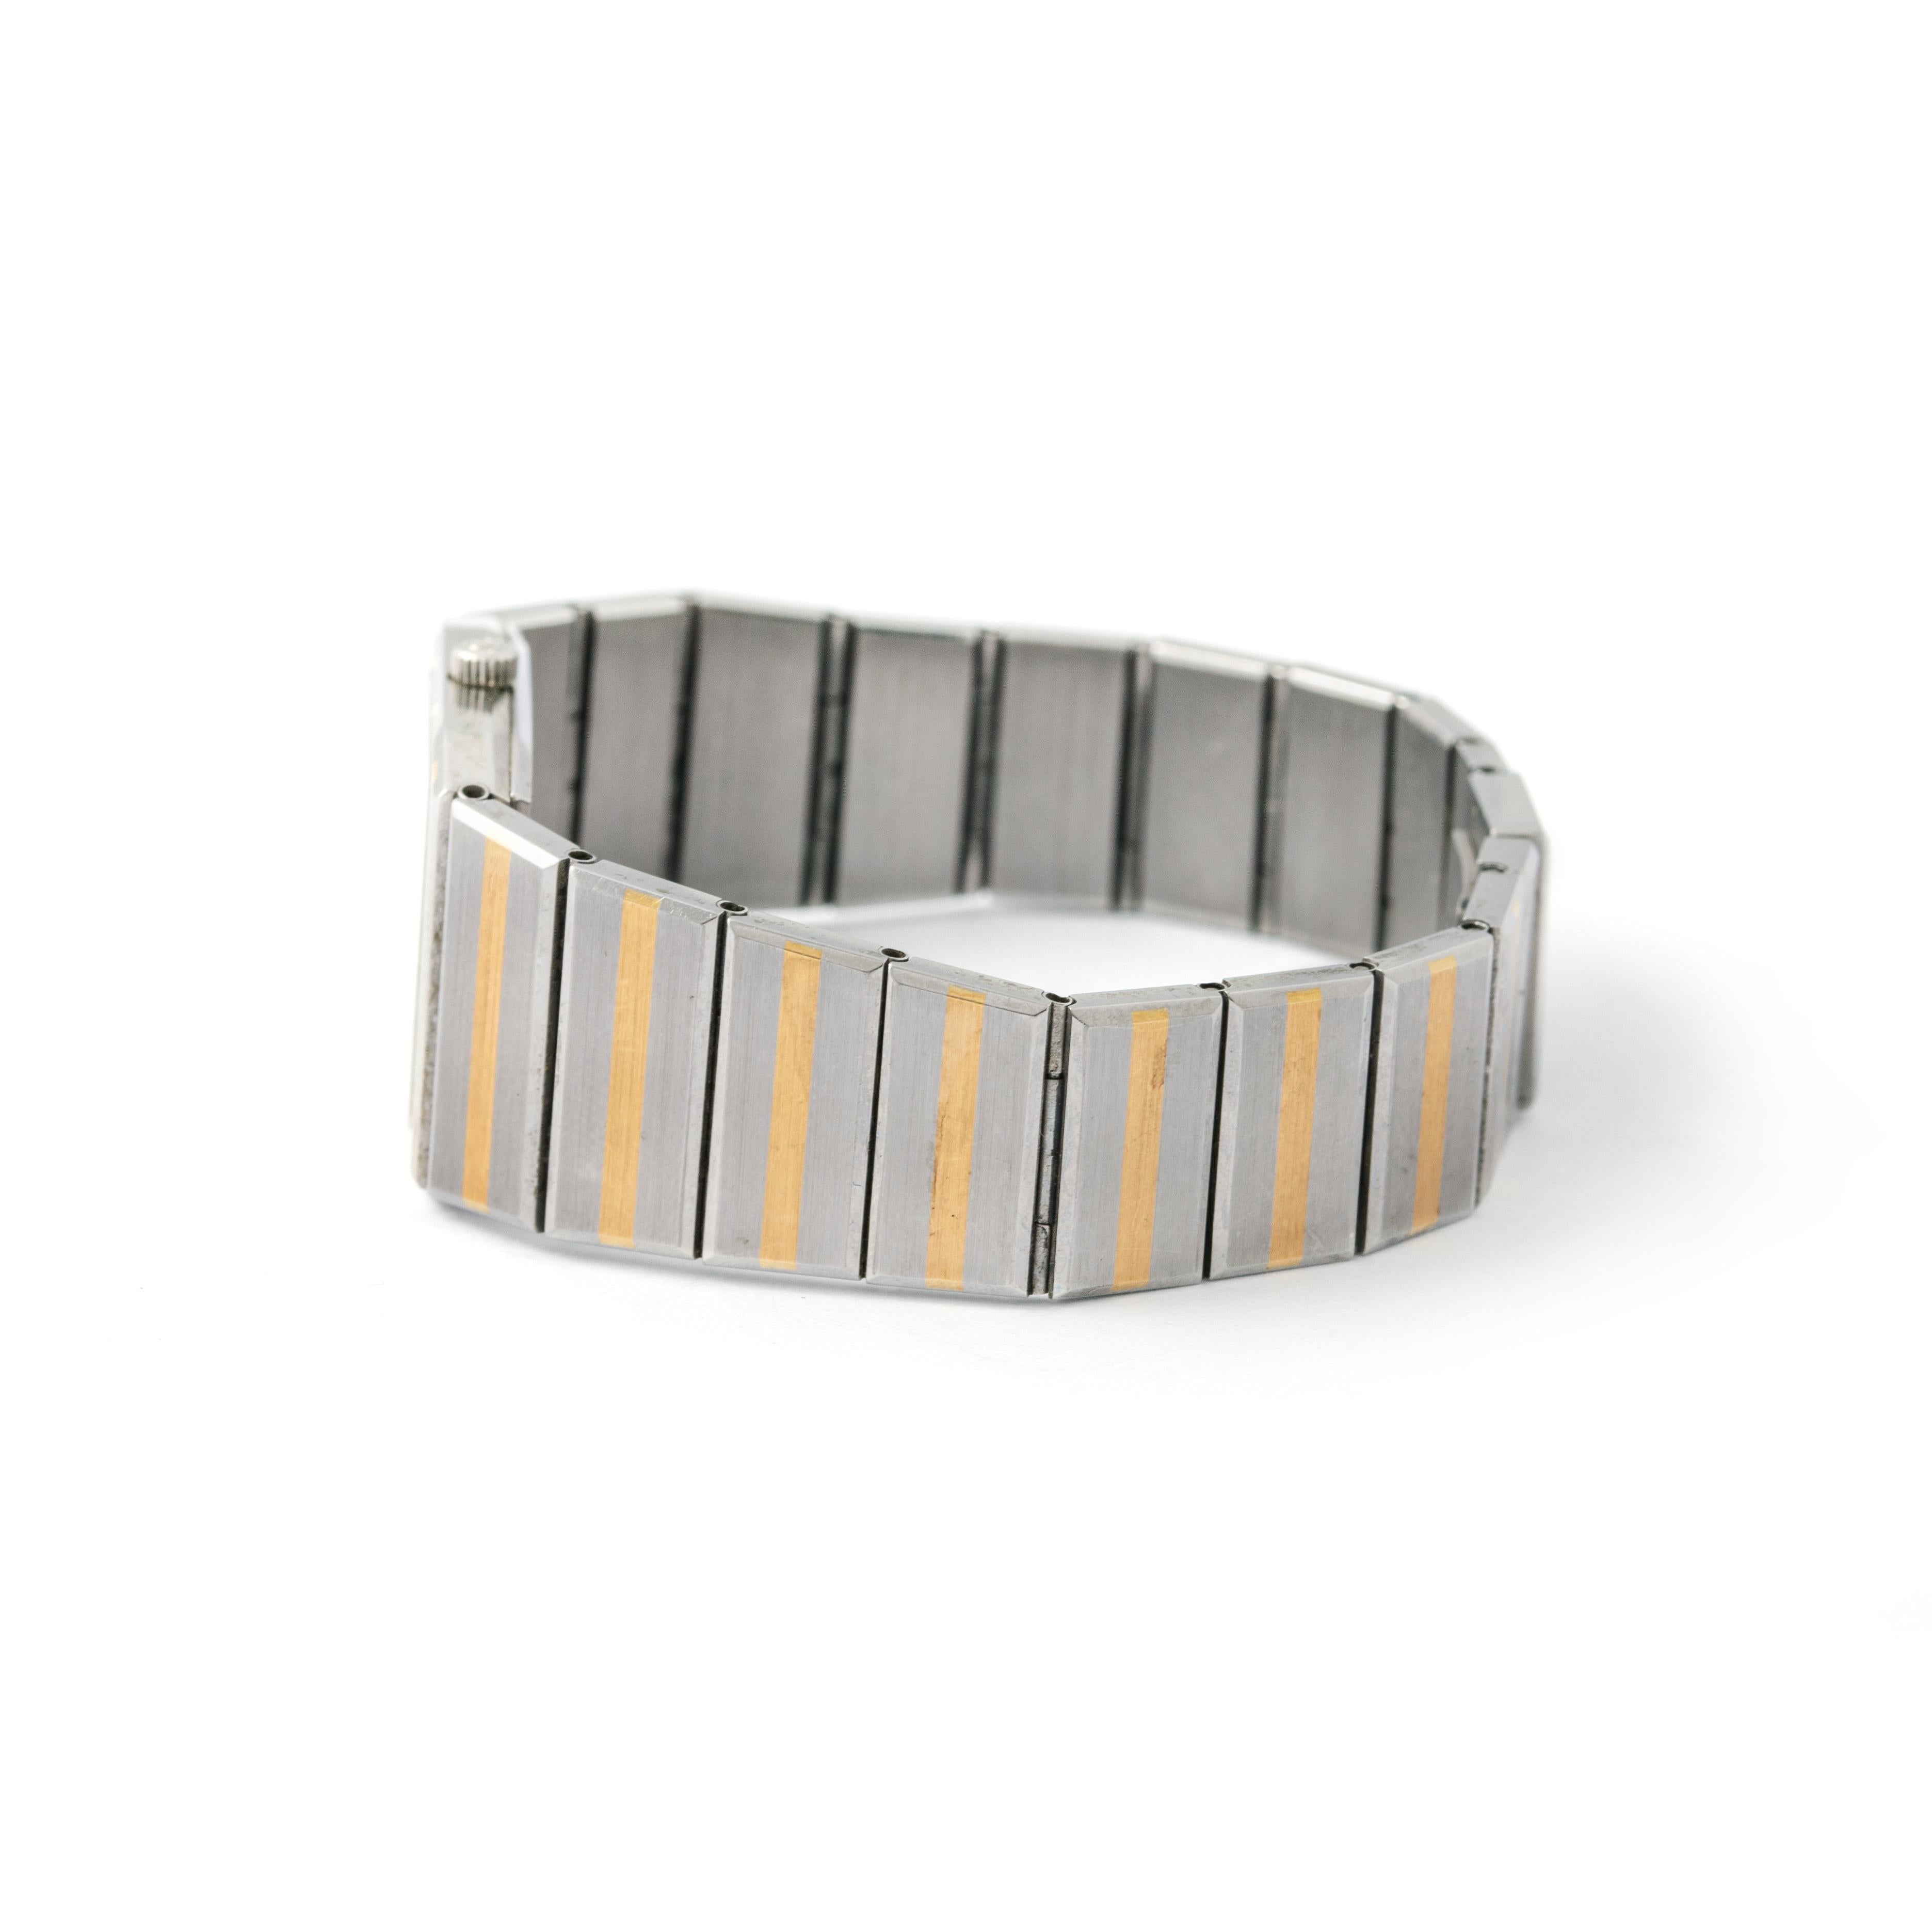 Baume & Mercier Classique Monte Carlo Stainless Steel Wristwatch For Sale 2